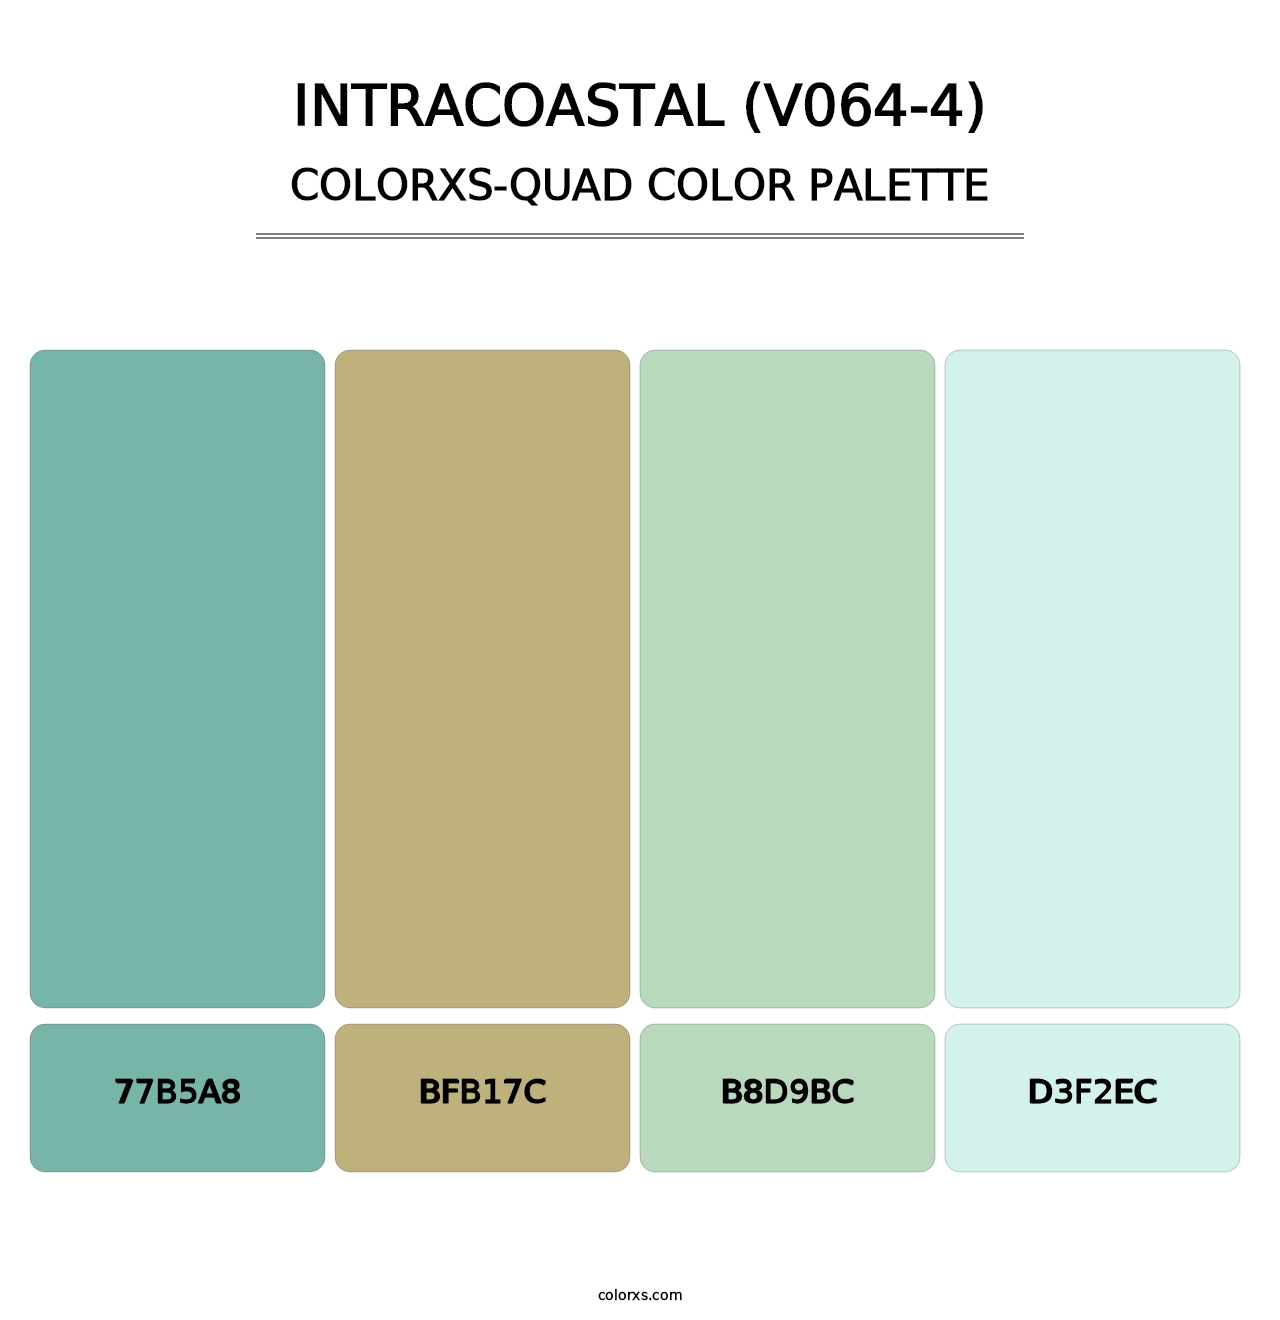 Intracoastal (V064-4) - Colorxs Quad Palette